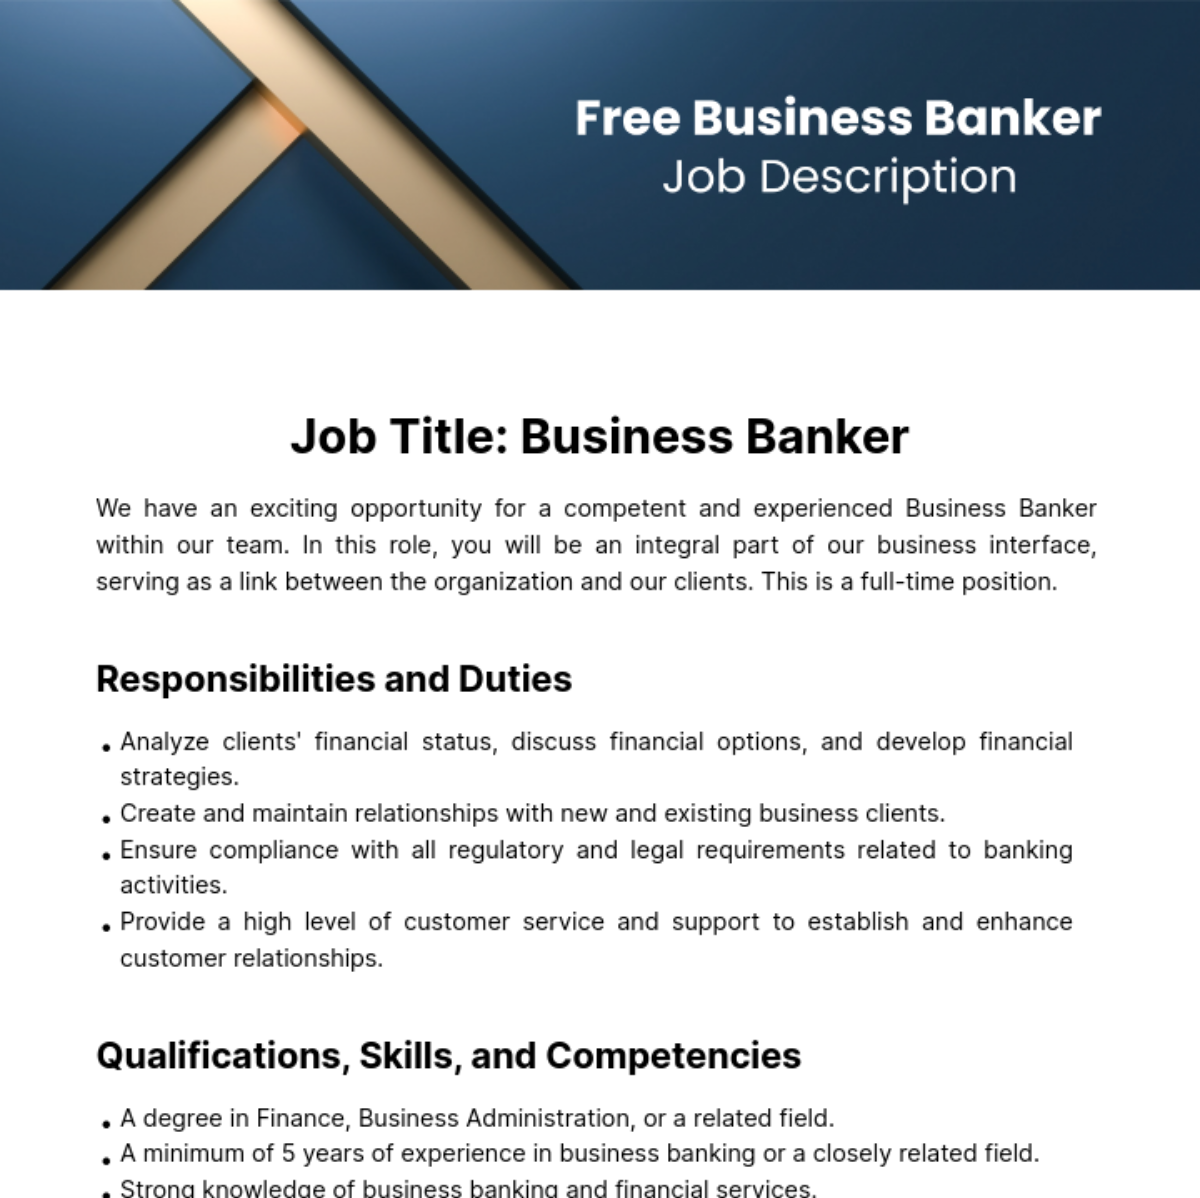 Free Business Banker Job Description Template